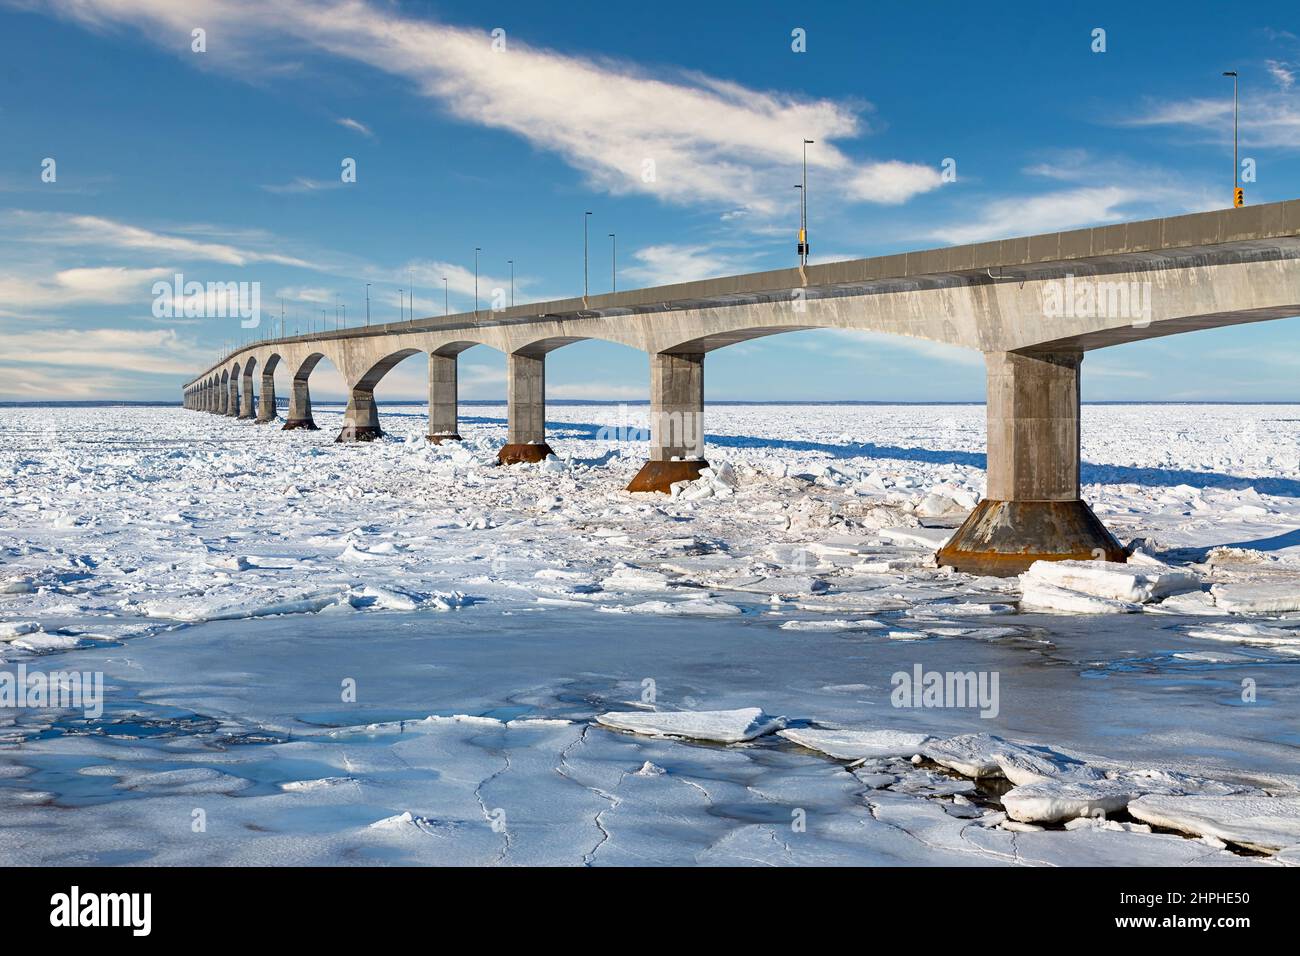 The Confederation Bridge in winter linking Prince Edward Island and mainland New Brunswick, Canada. Viewed form the Borden, Prince Edward Island. Stock Photo